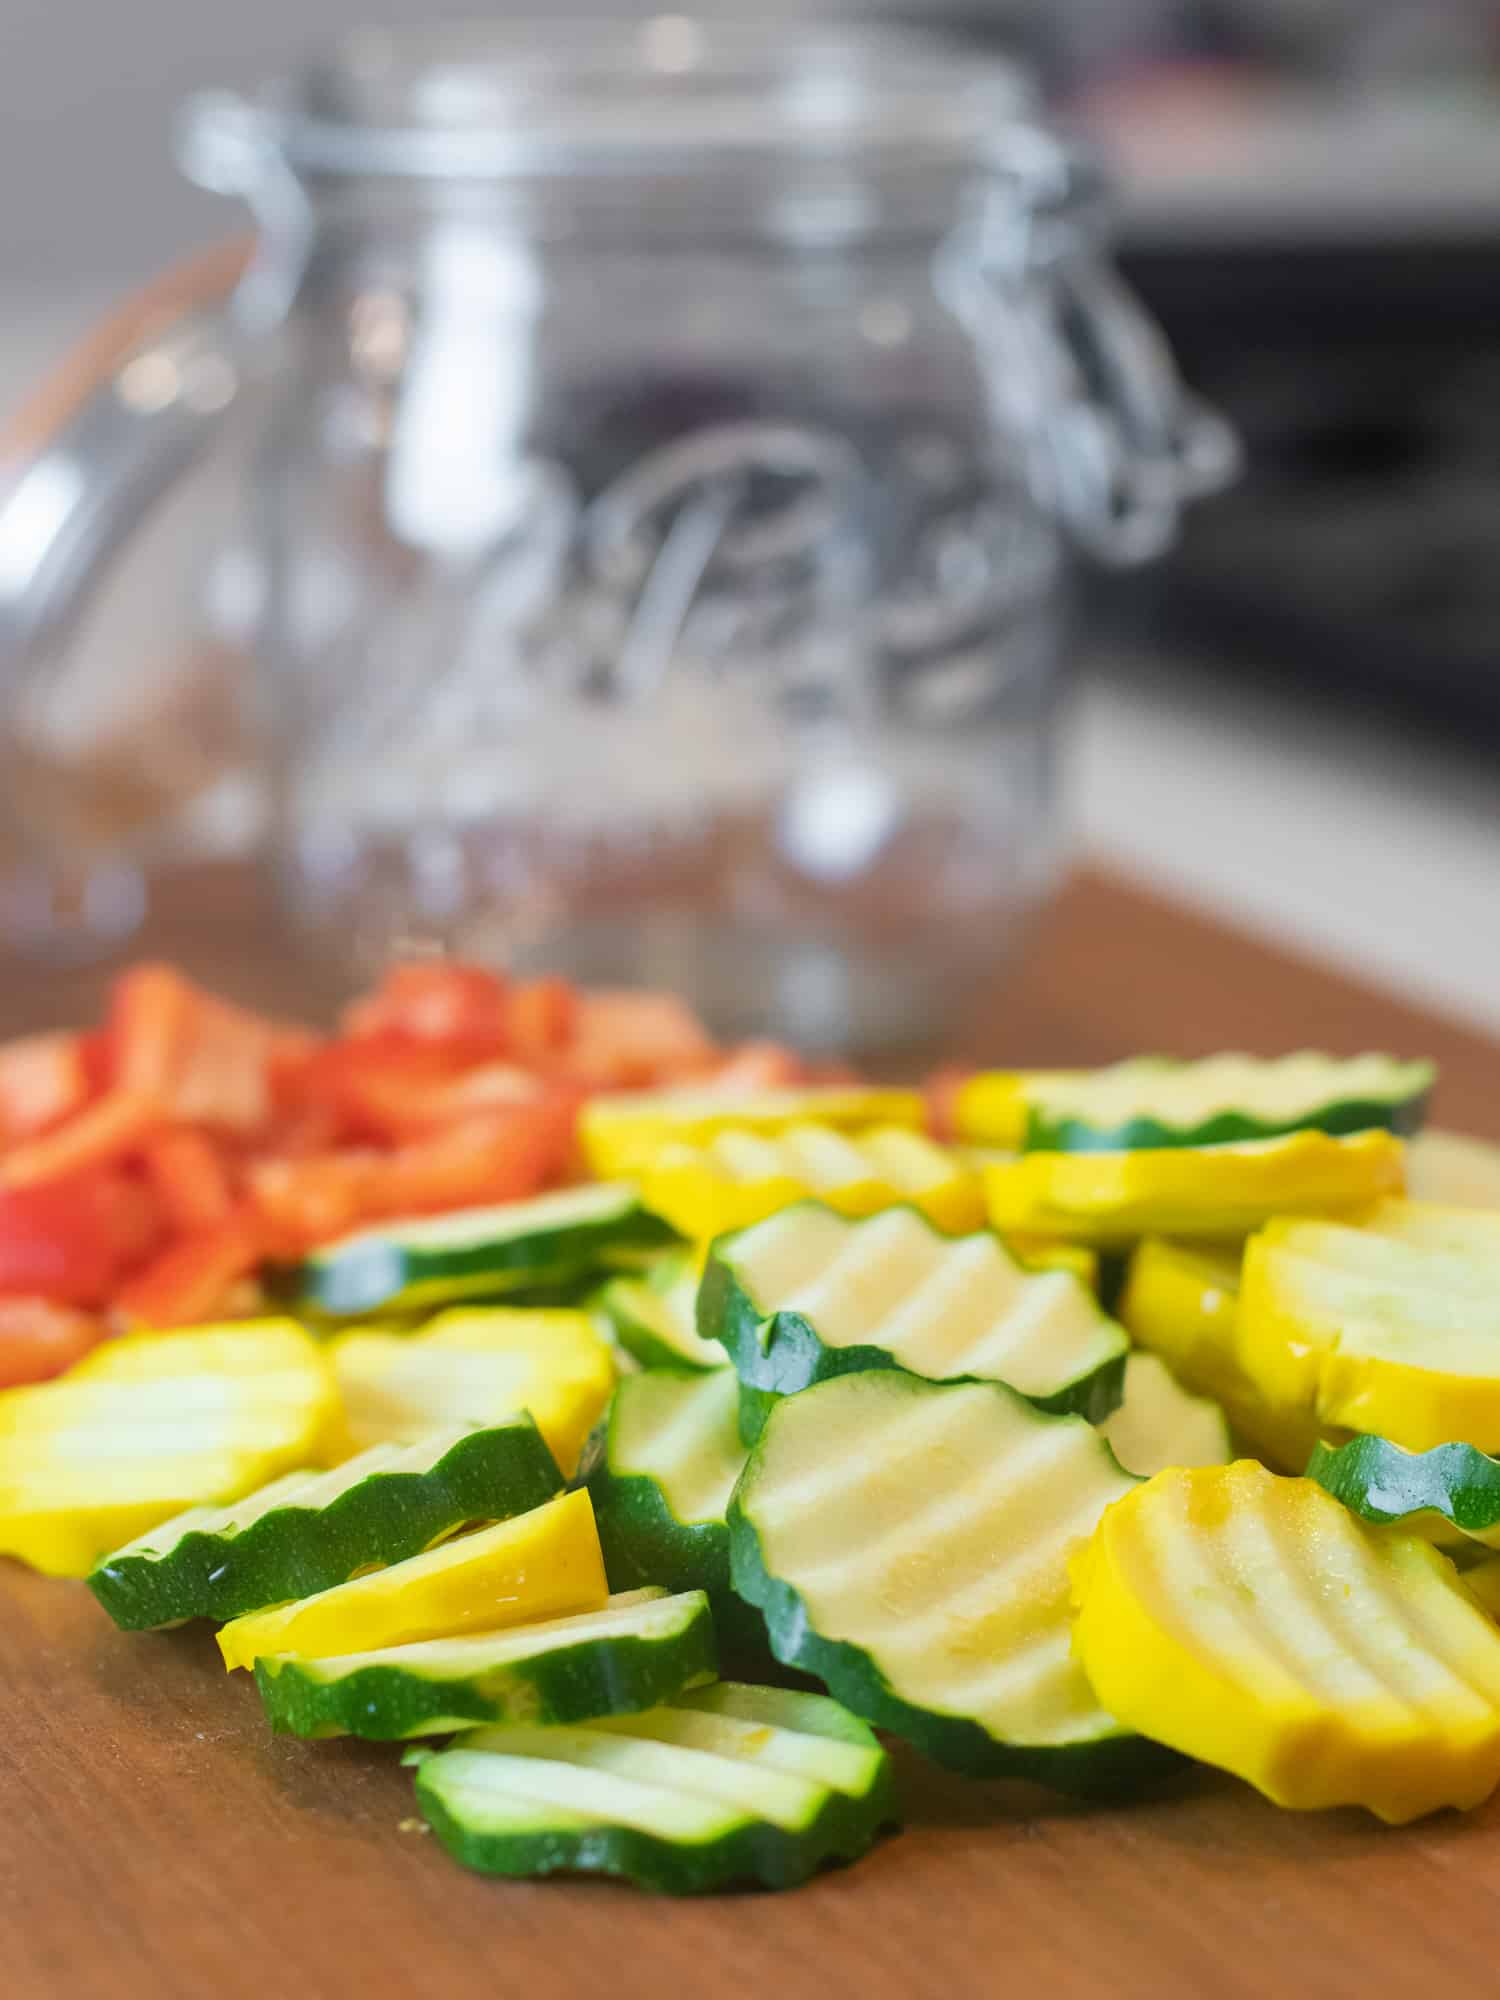 Cut the zucchini with a wavy cutter